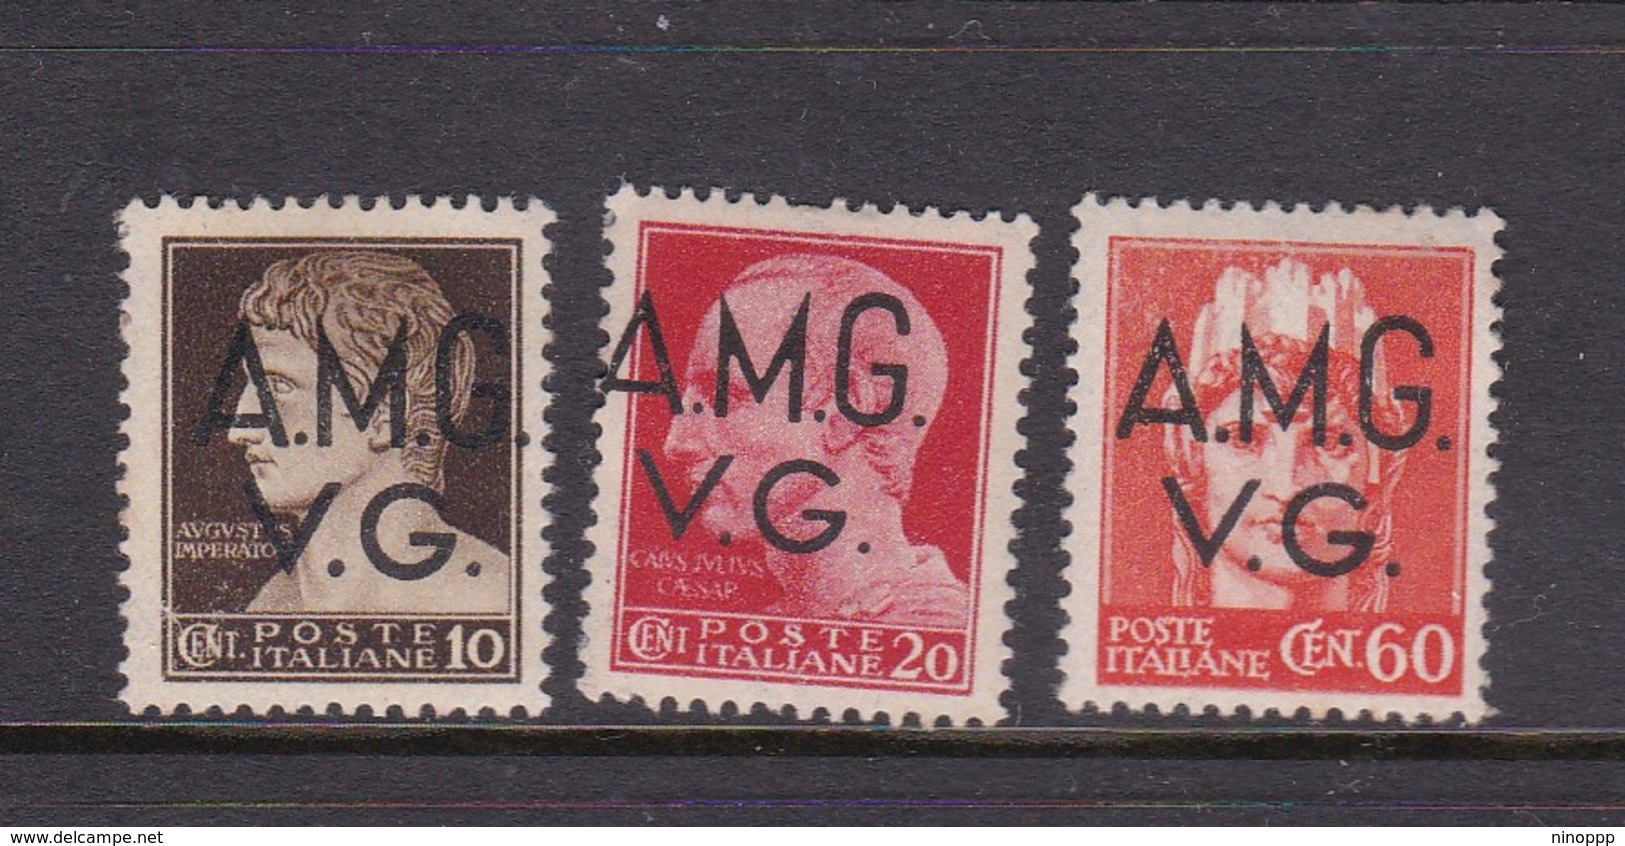 Venezia Giulia And Istria  A.M.G.V.G. 1945 S 8-10 1945 Definitives  Mint Hinged - Neufs